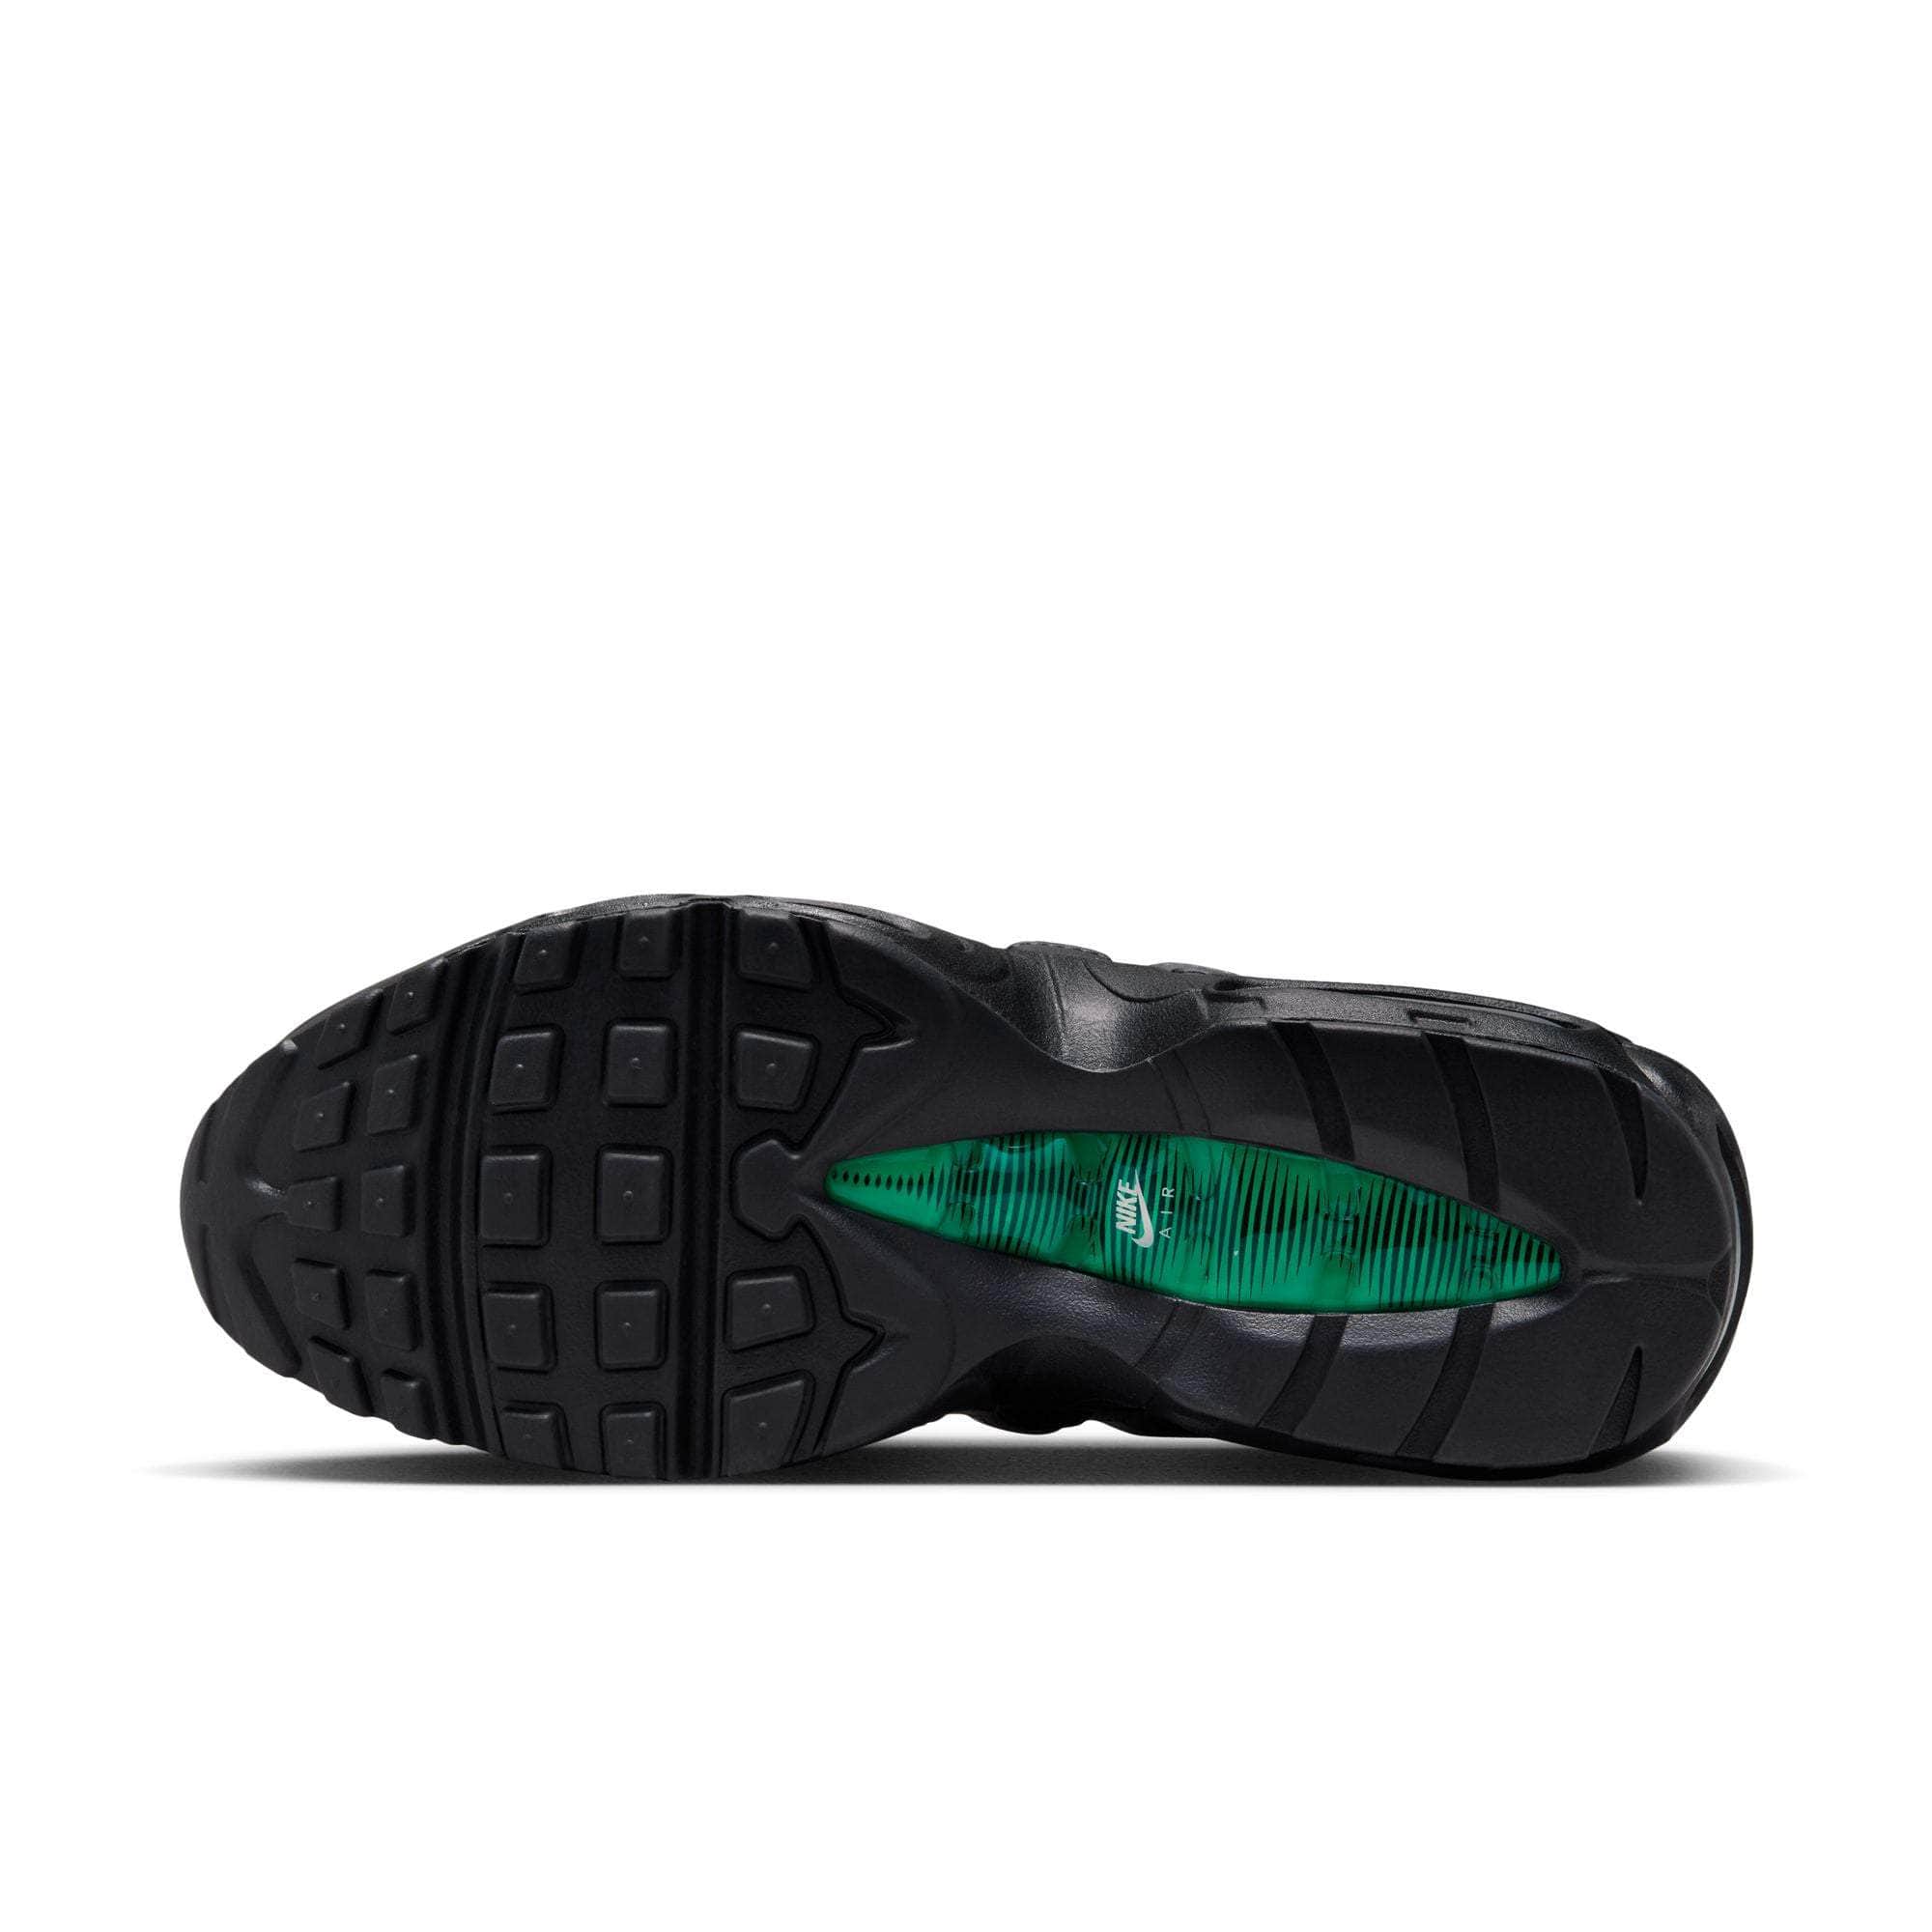 NIKE FOOTWEAR Nike Air Max 95 “Stadium Green” - Women's